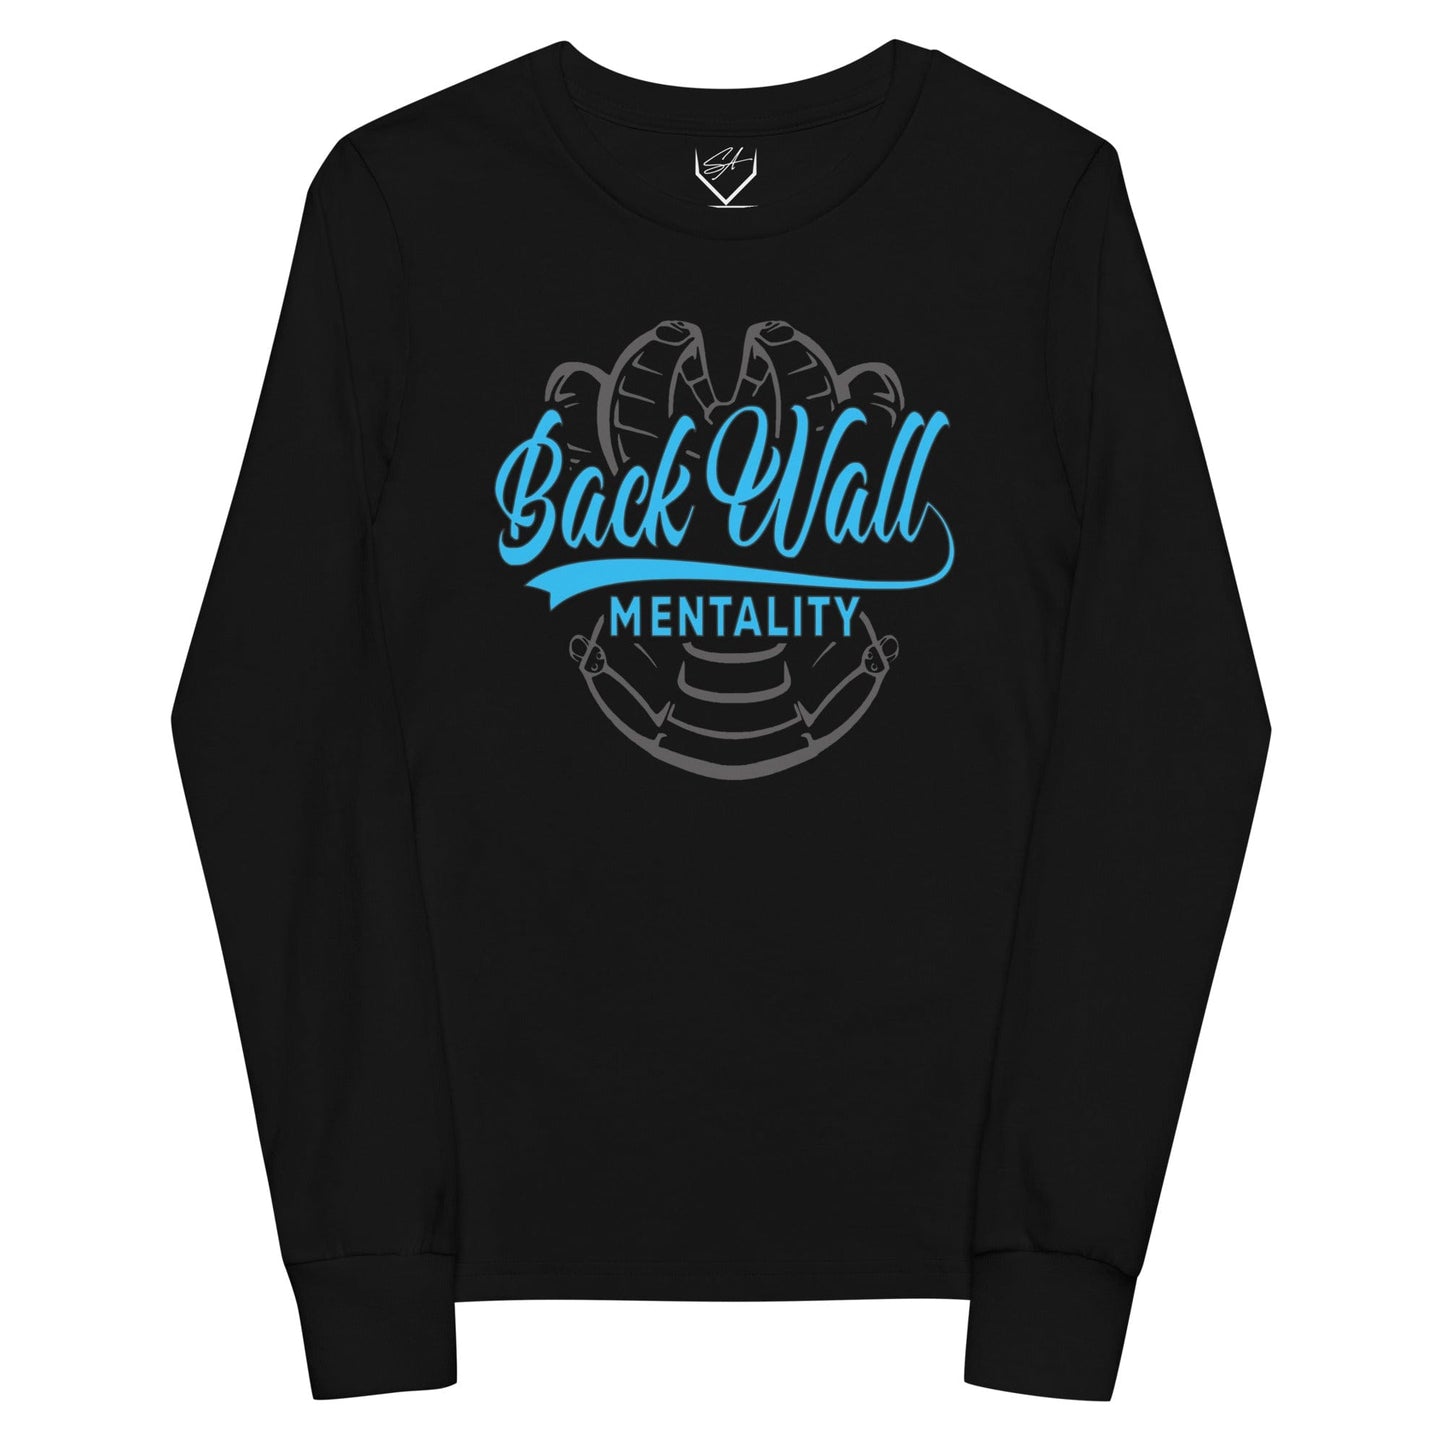 Backwall Mentality Teal - Youth Long Sleeve